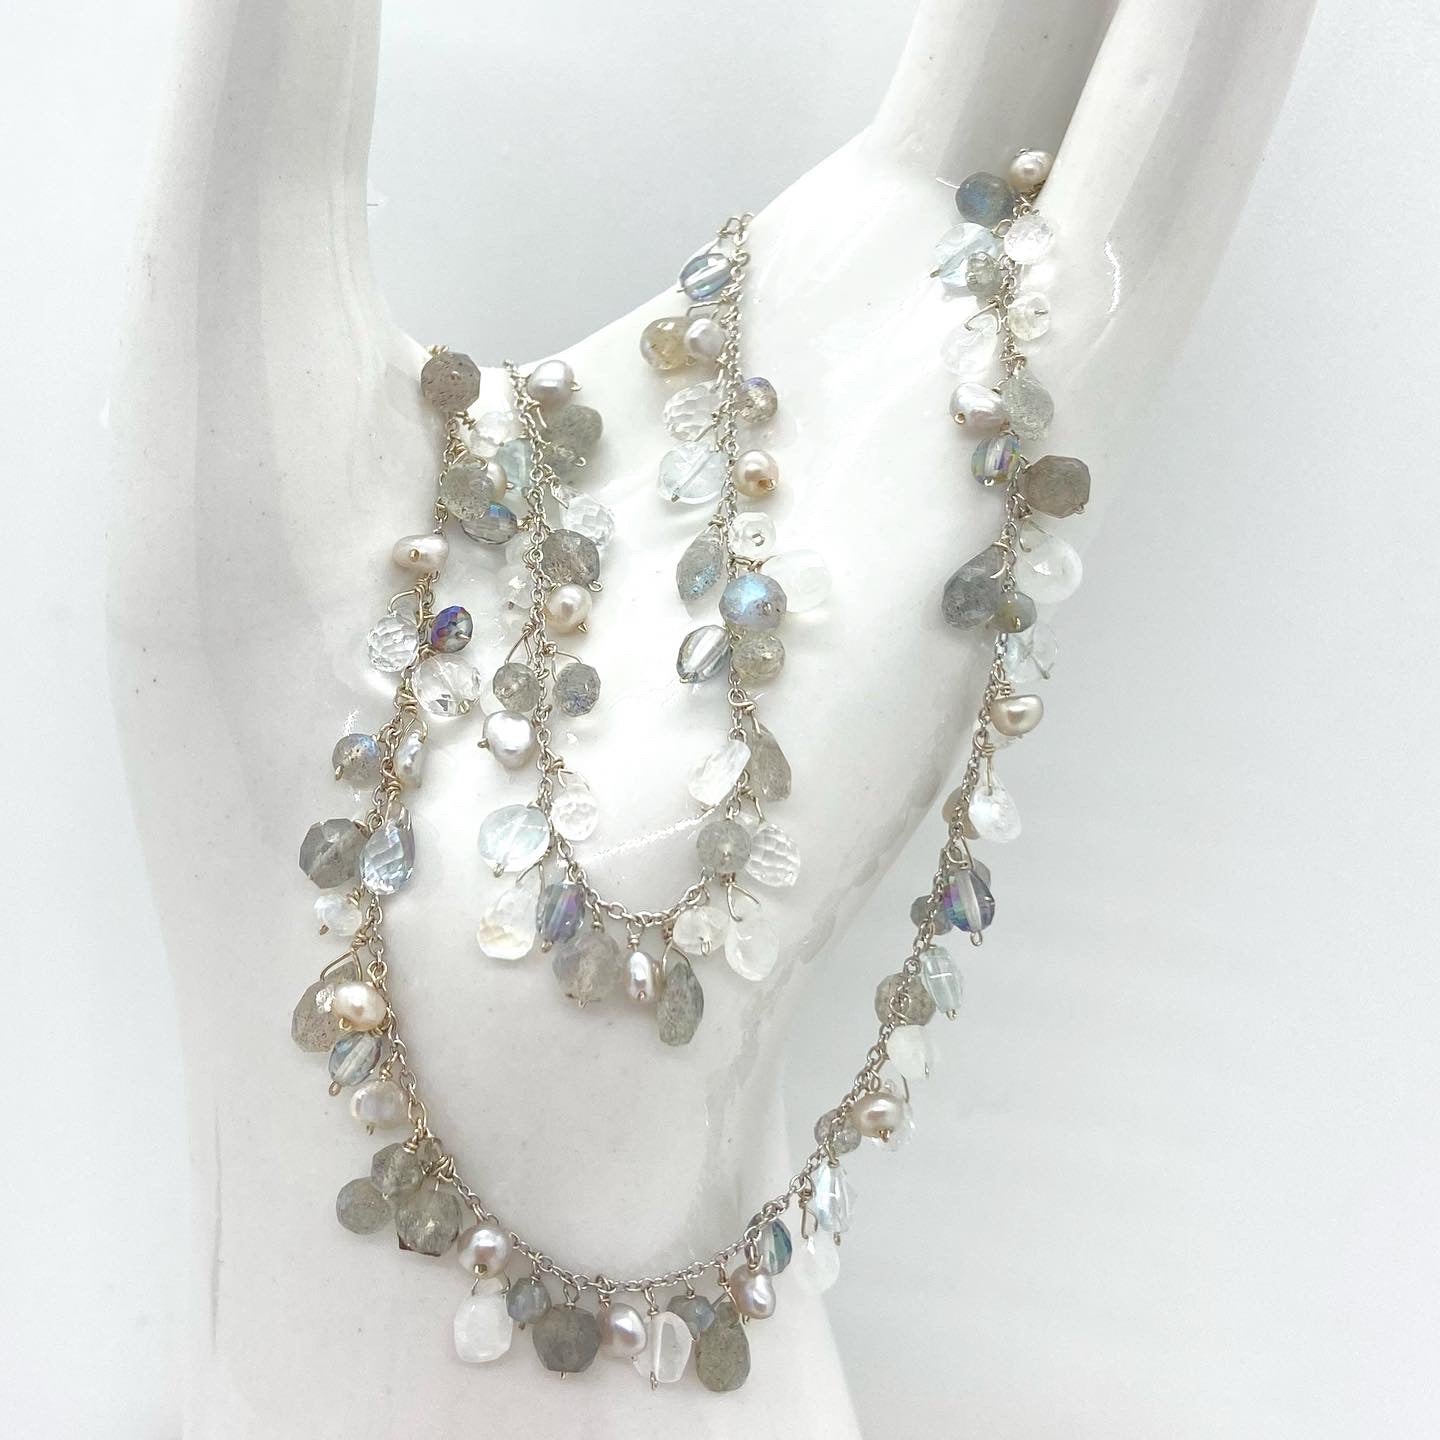 14k White Gold Chain Necklace w/ Labradorite, Moonstone, Freshwater Pearls, Mystic Topaz, Quartz & Keshi Pearls